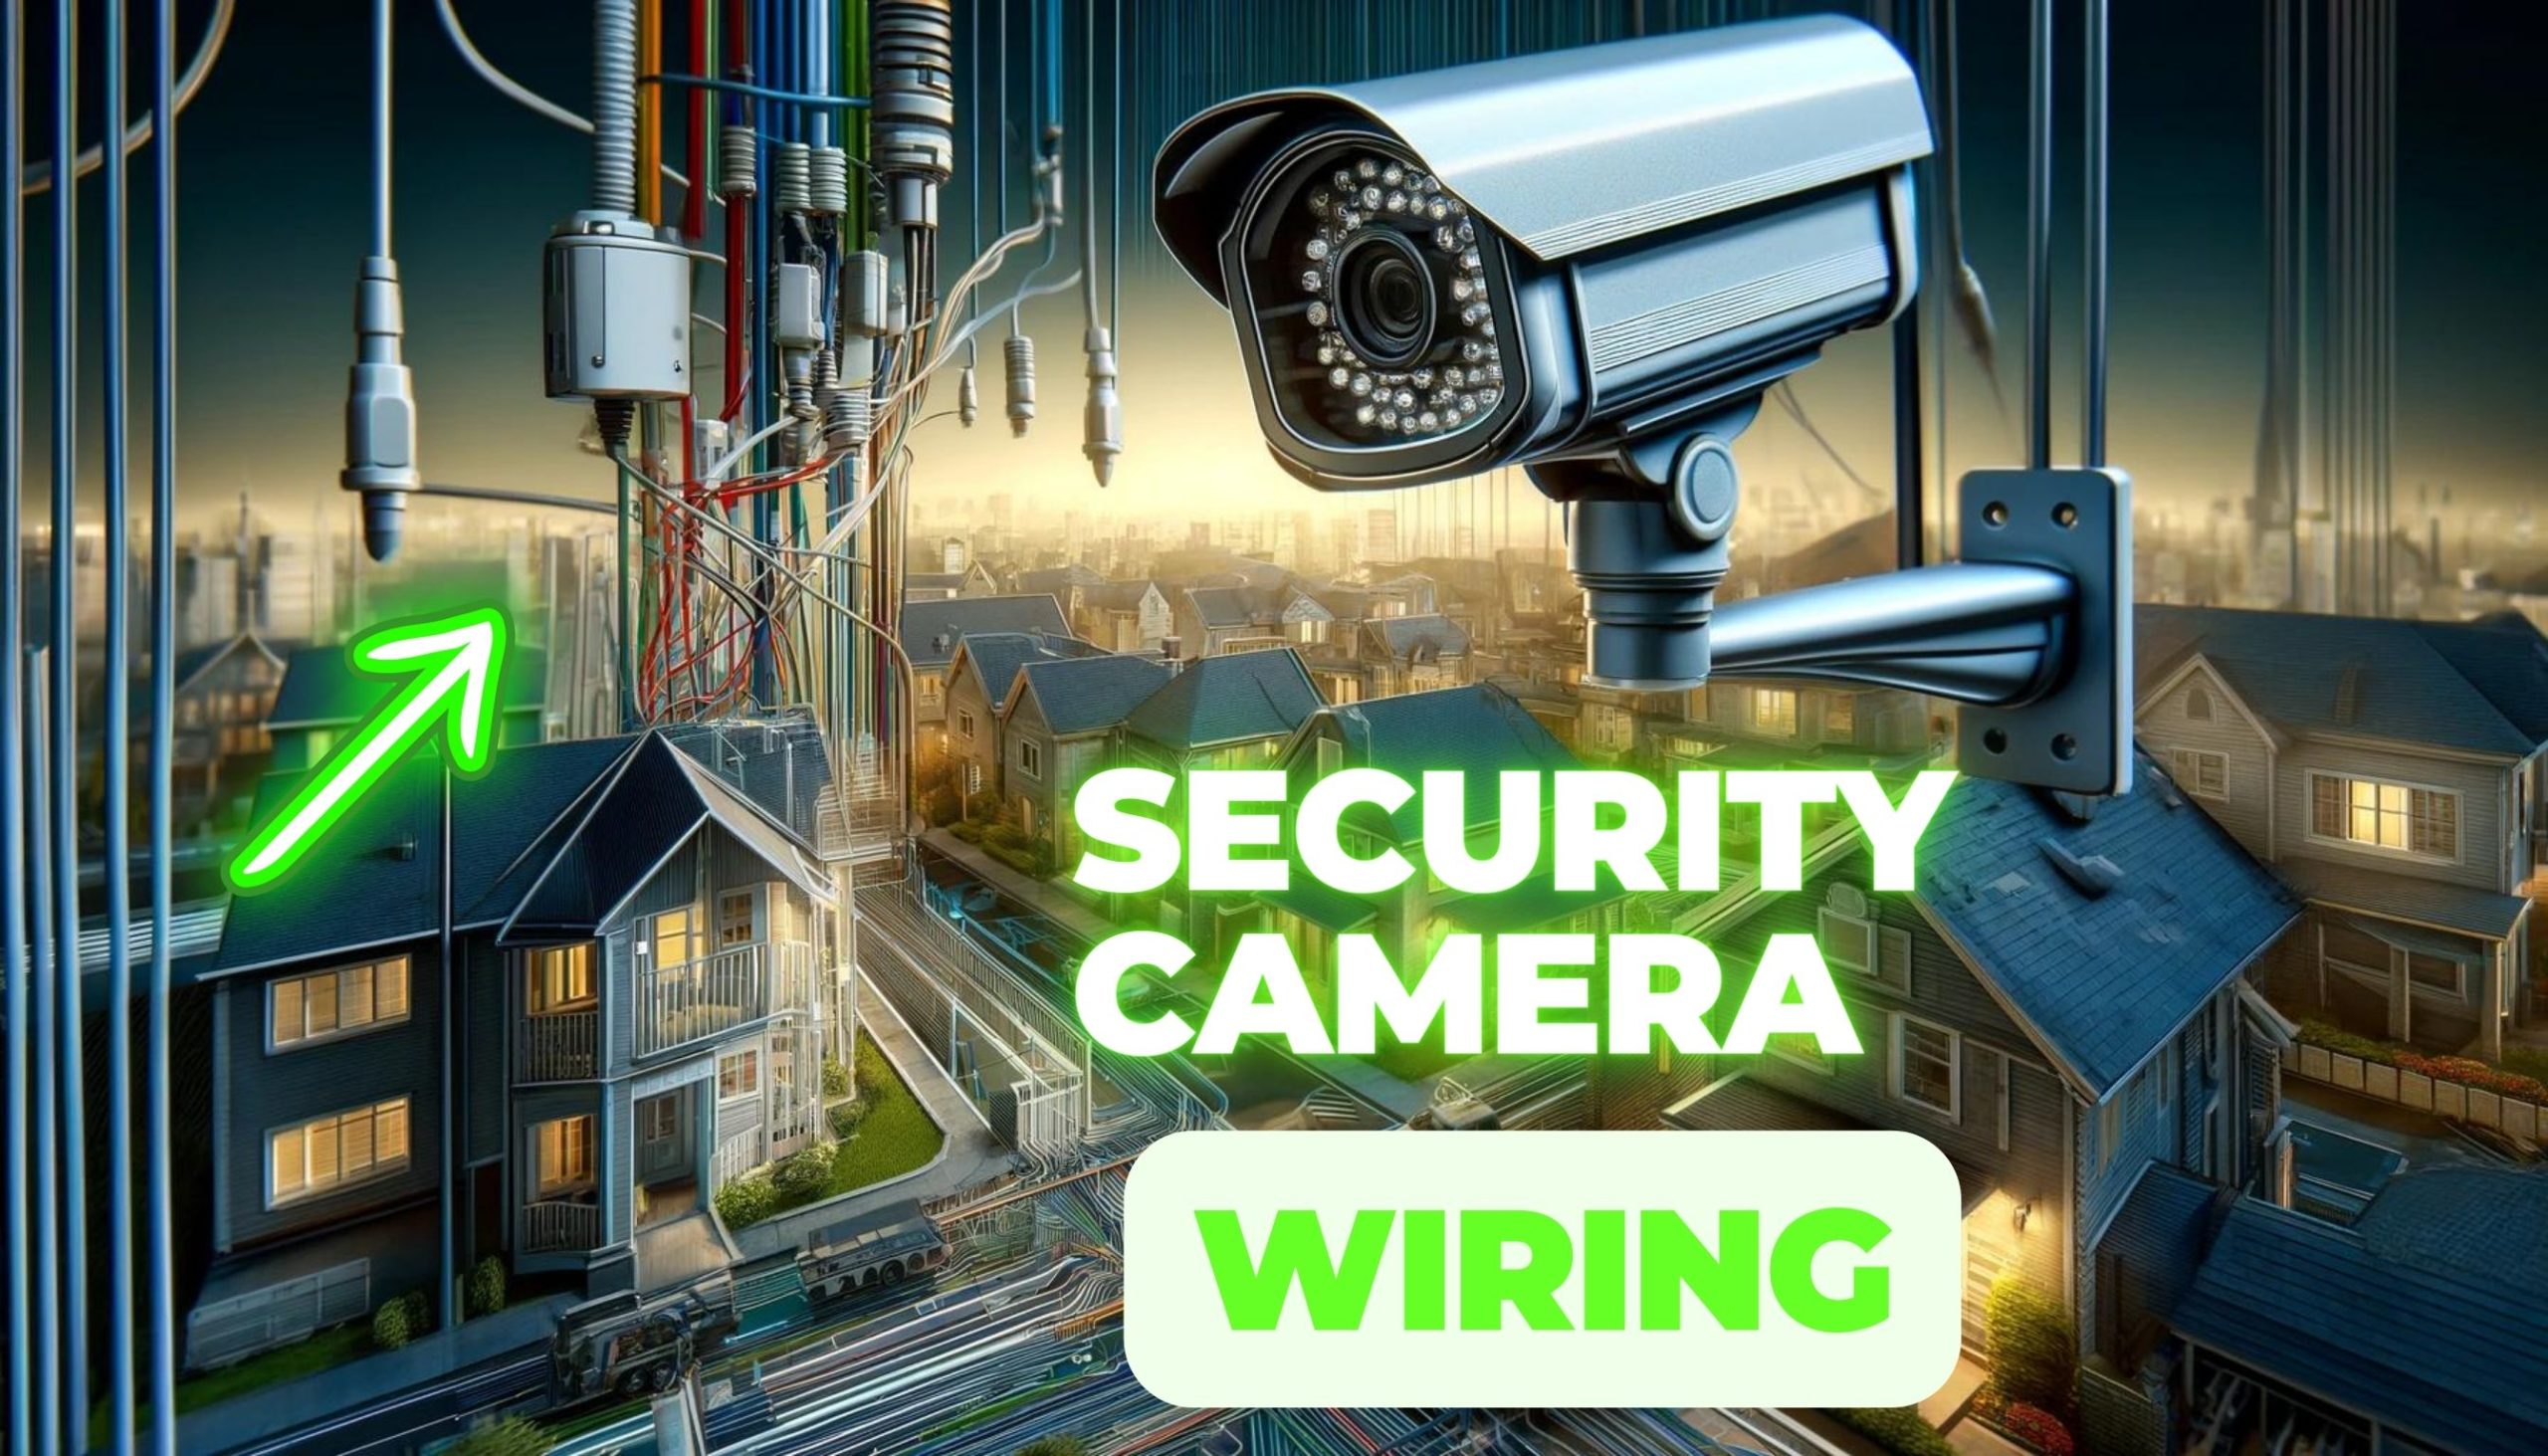 Security camera wiring